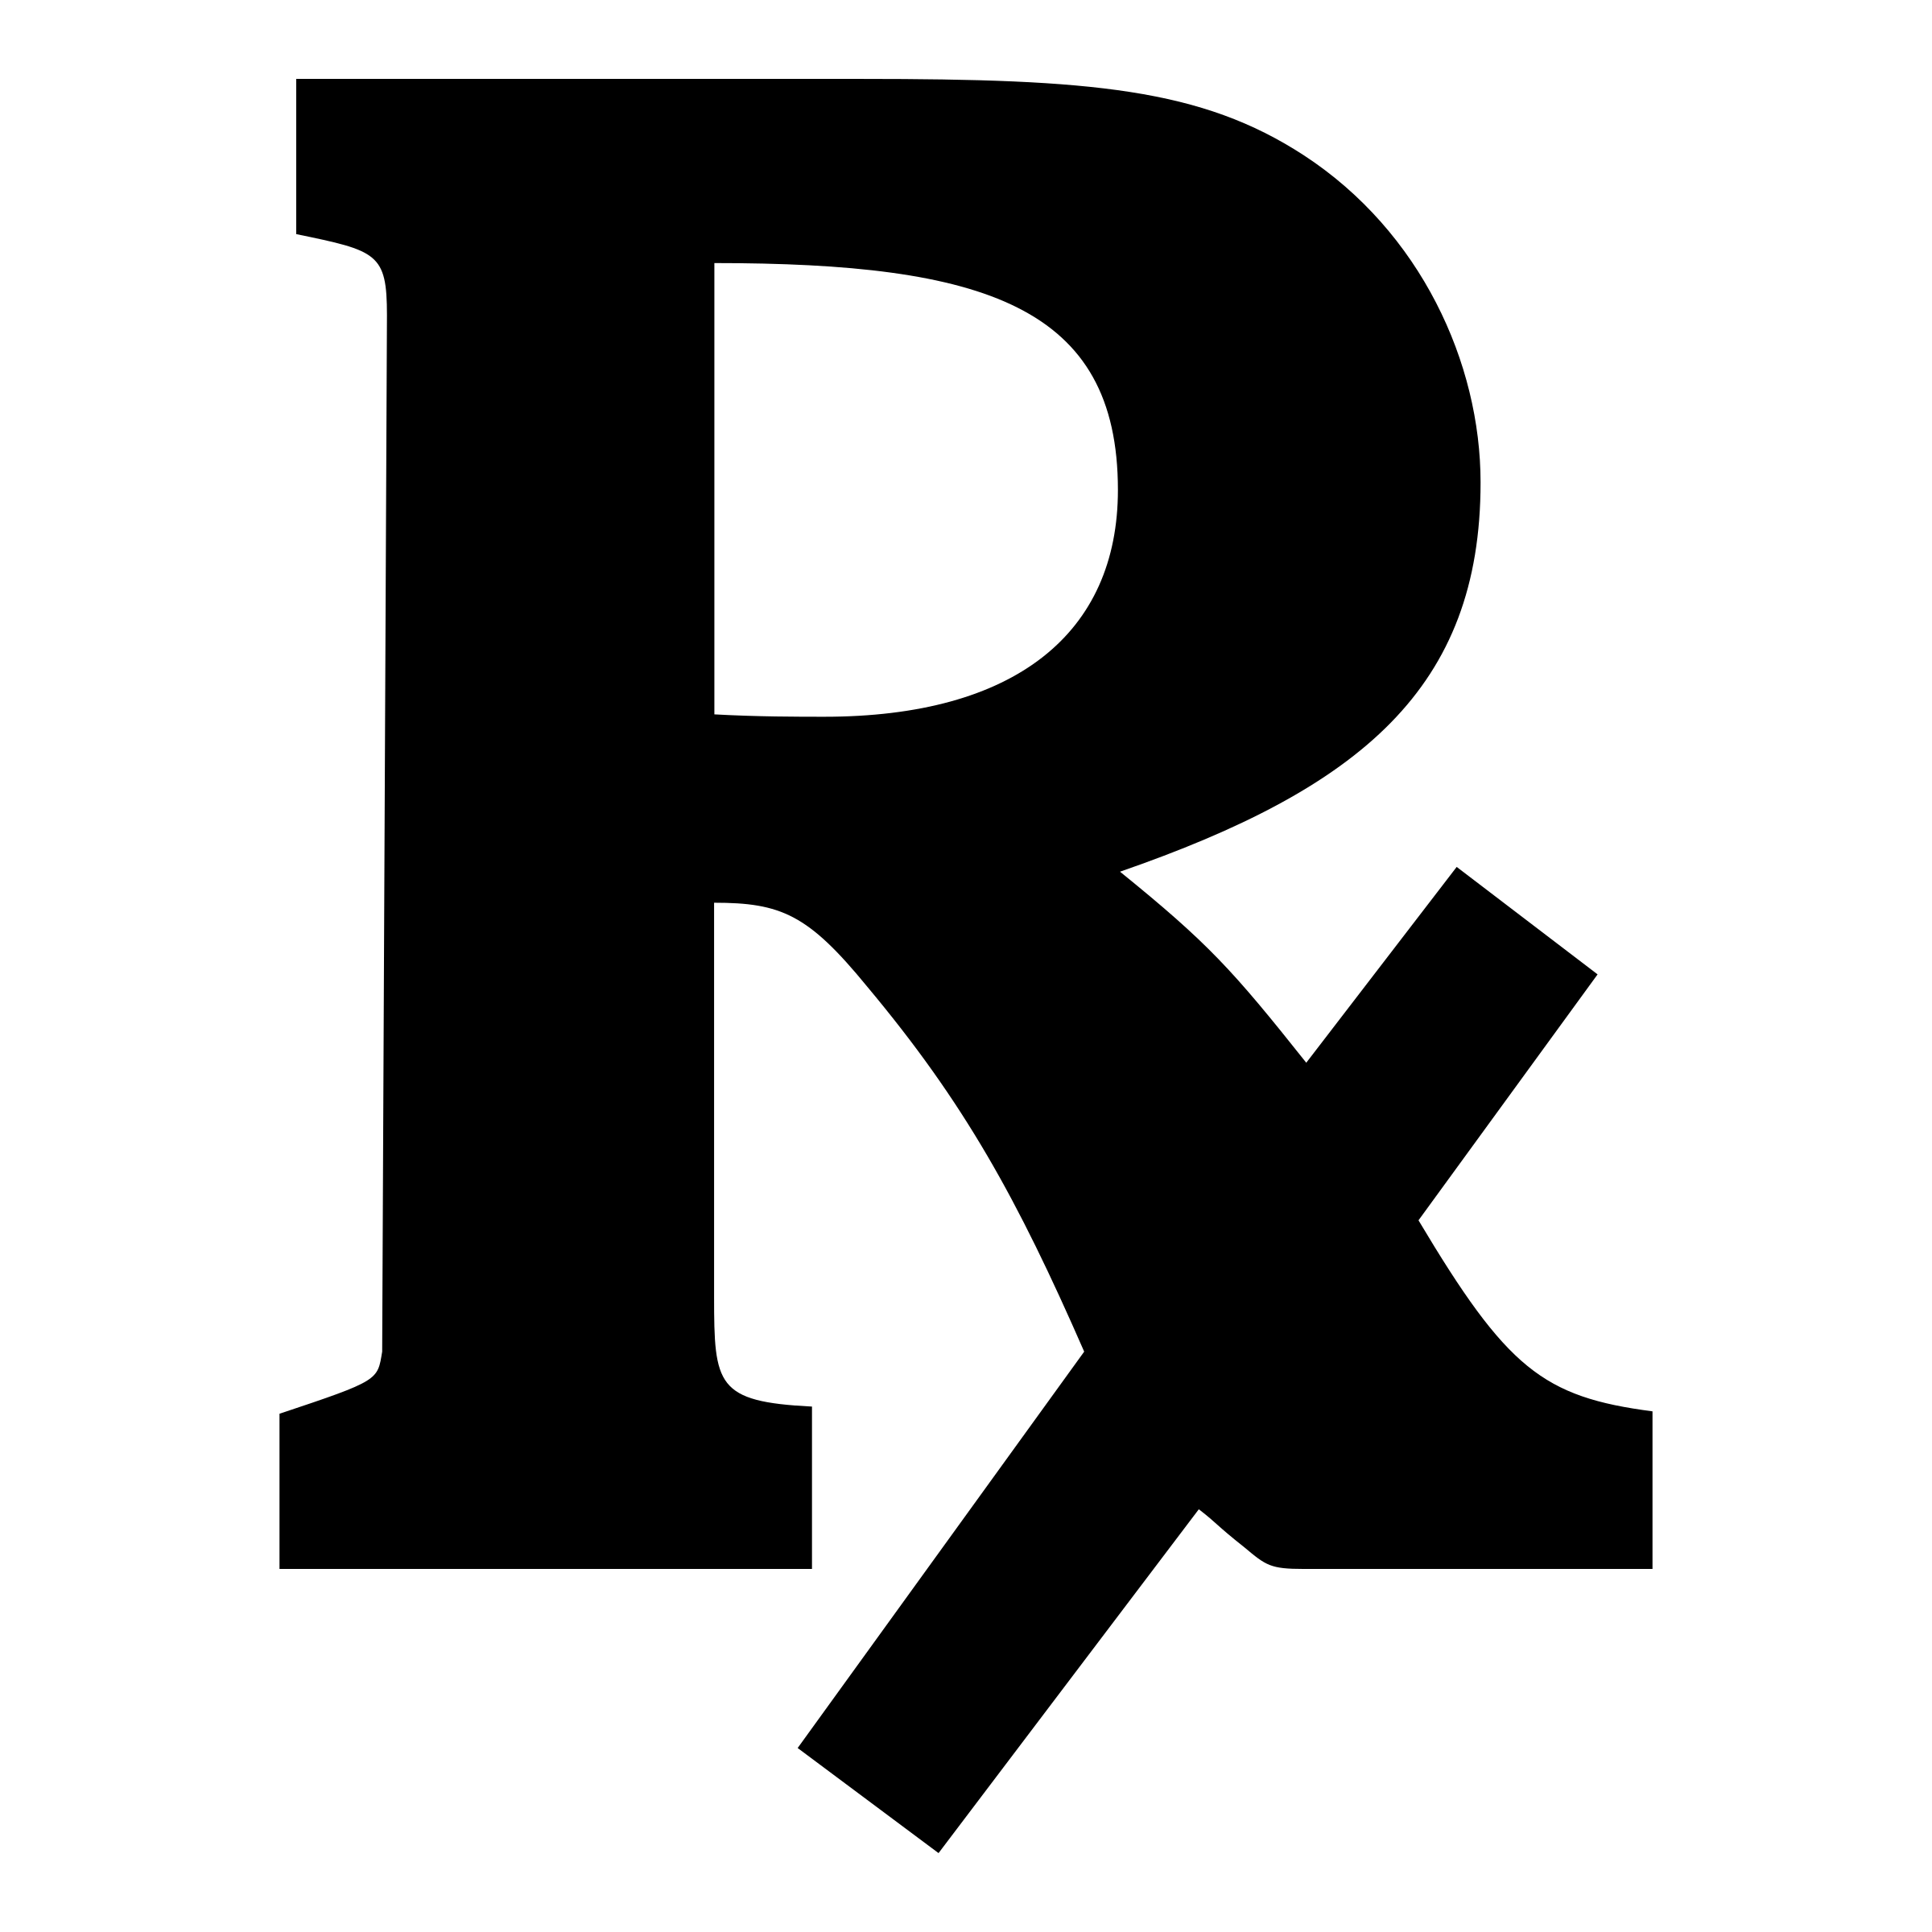 RX Logo - RX Logo PNG Transparent & SVG Vector - Freebie Supply